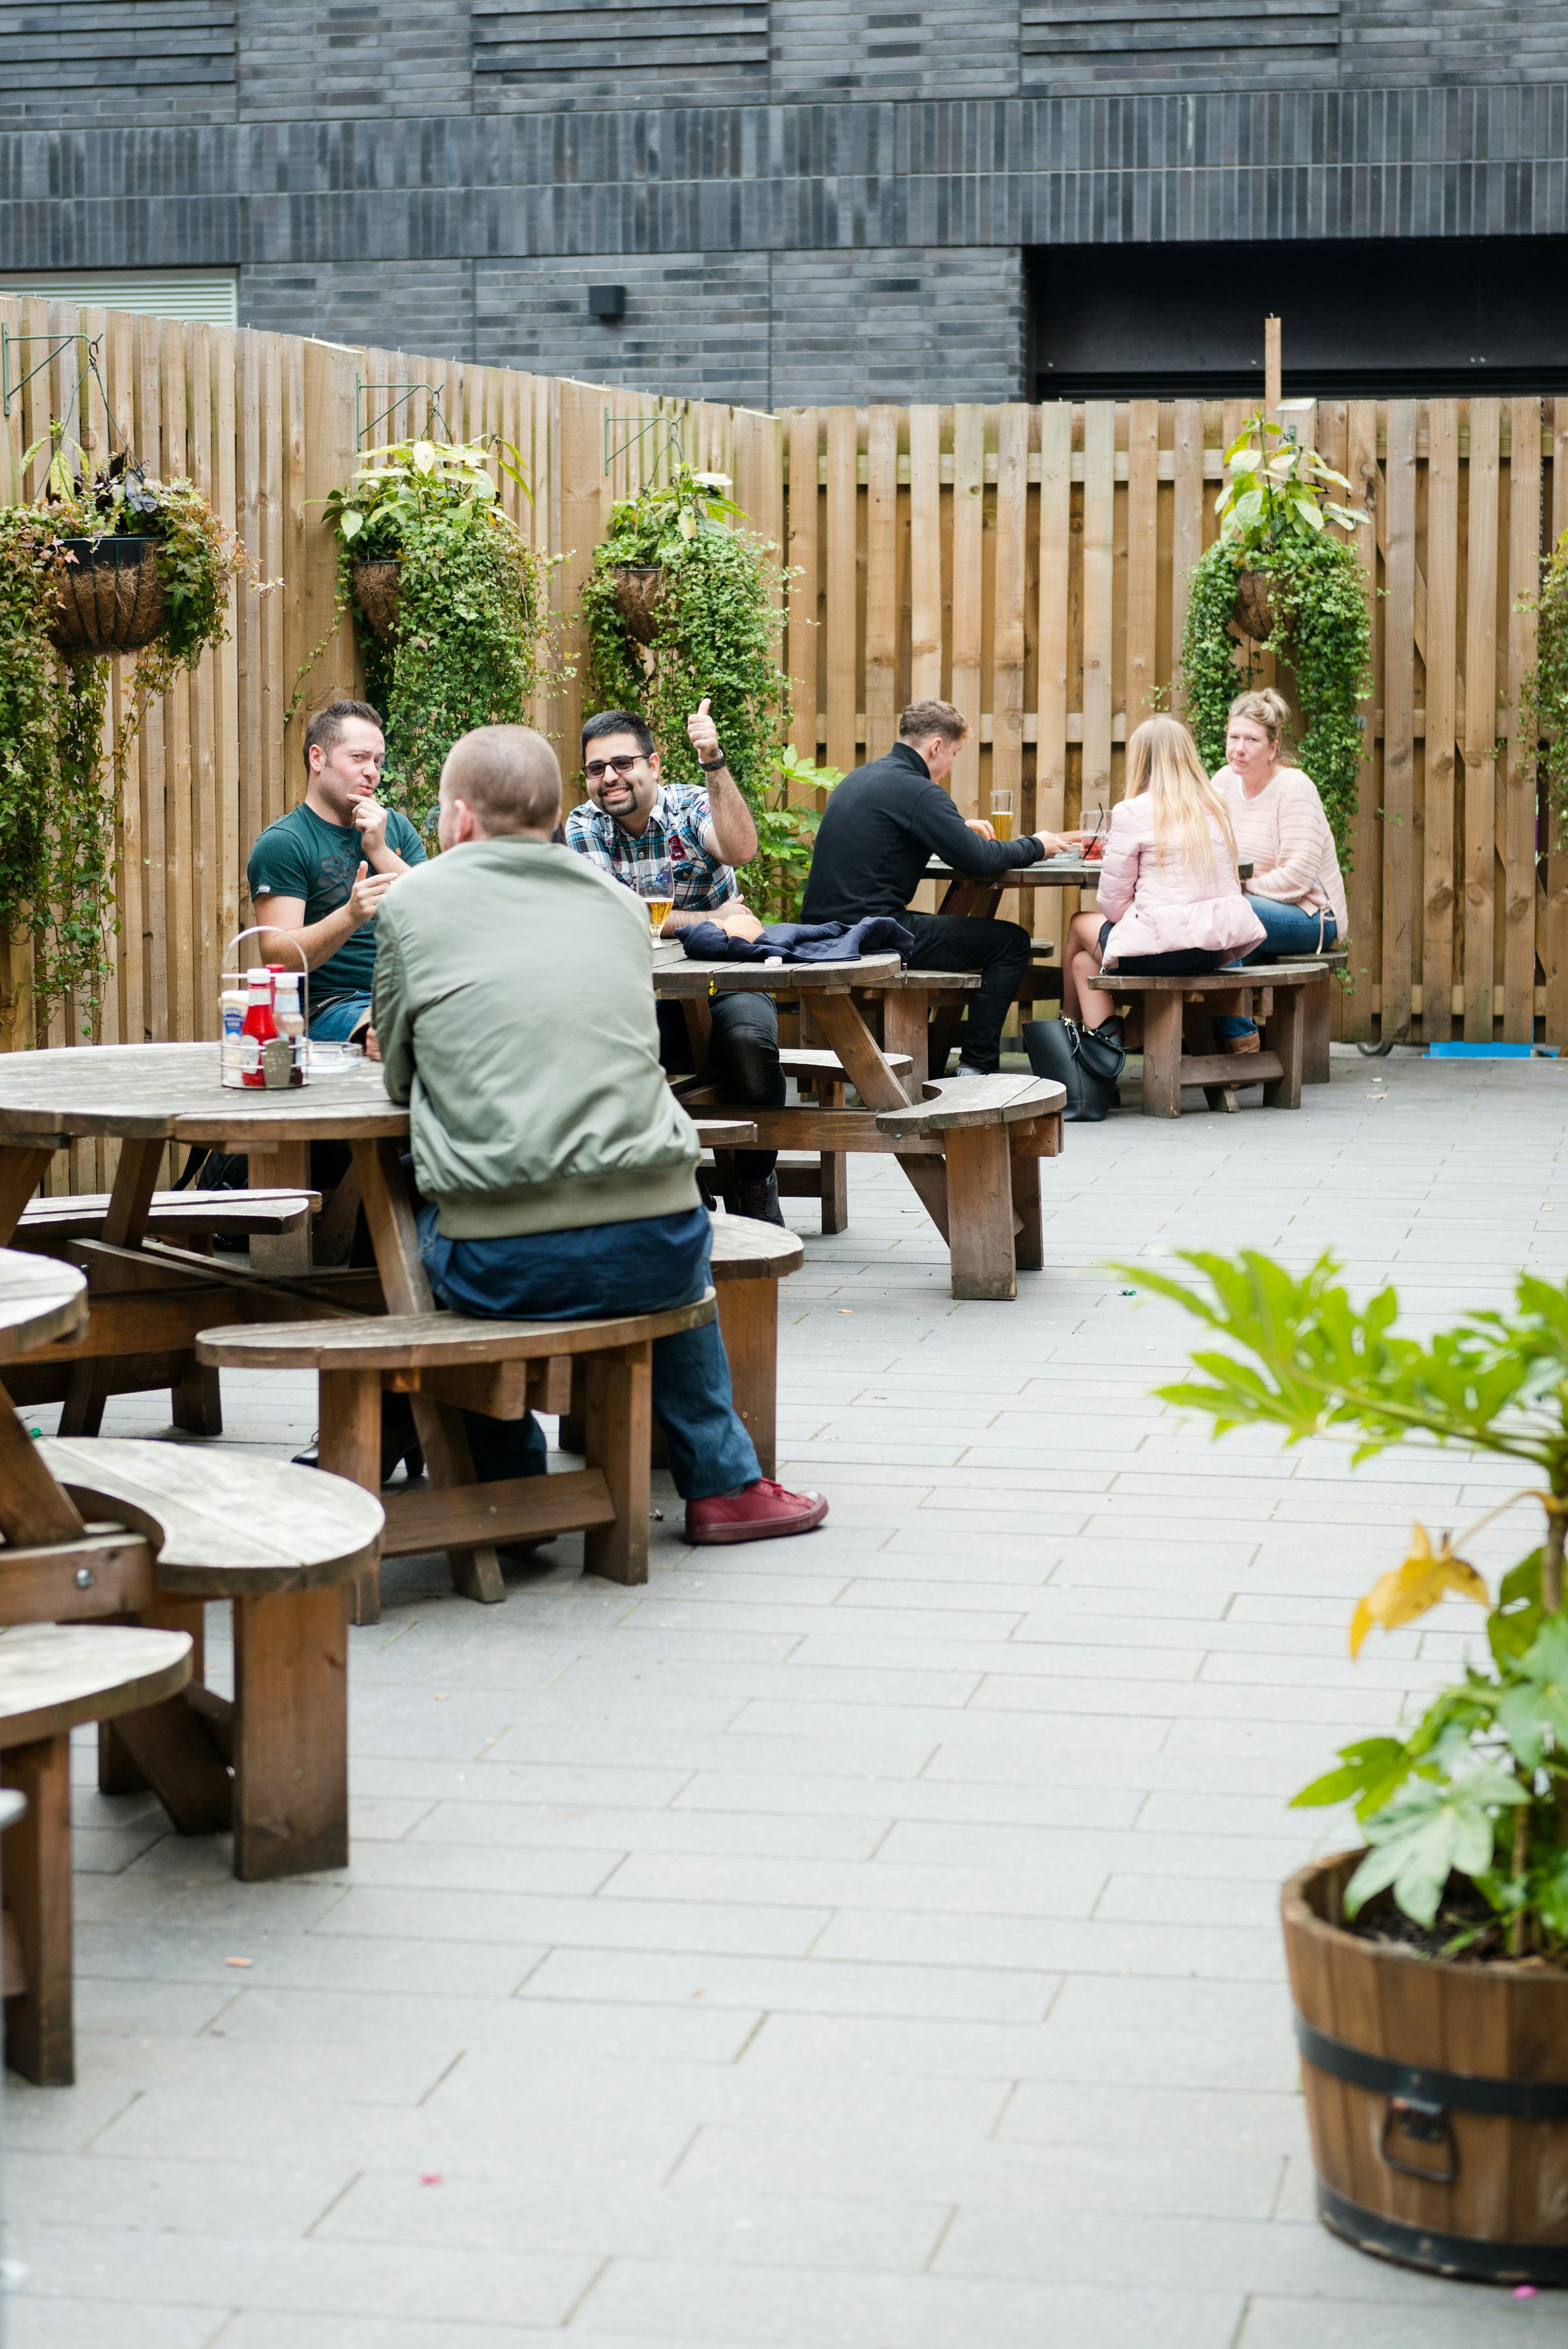 Beer Gardens Venues in London - The Salutation Pub